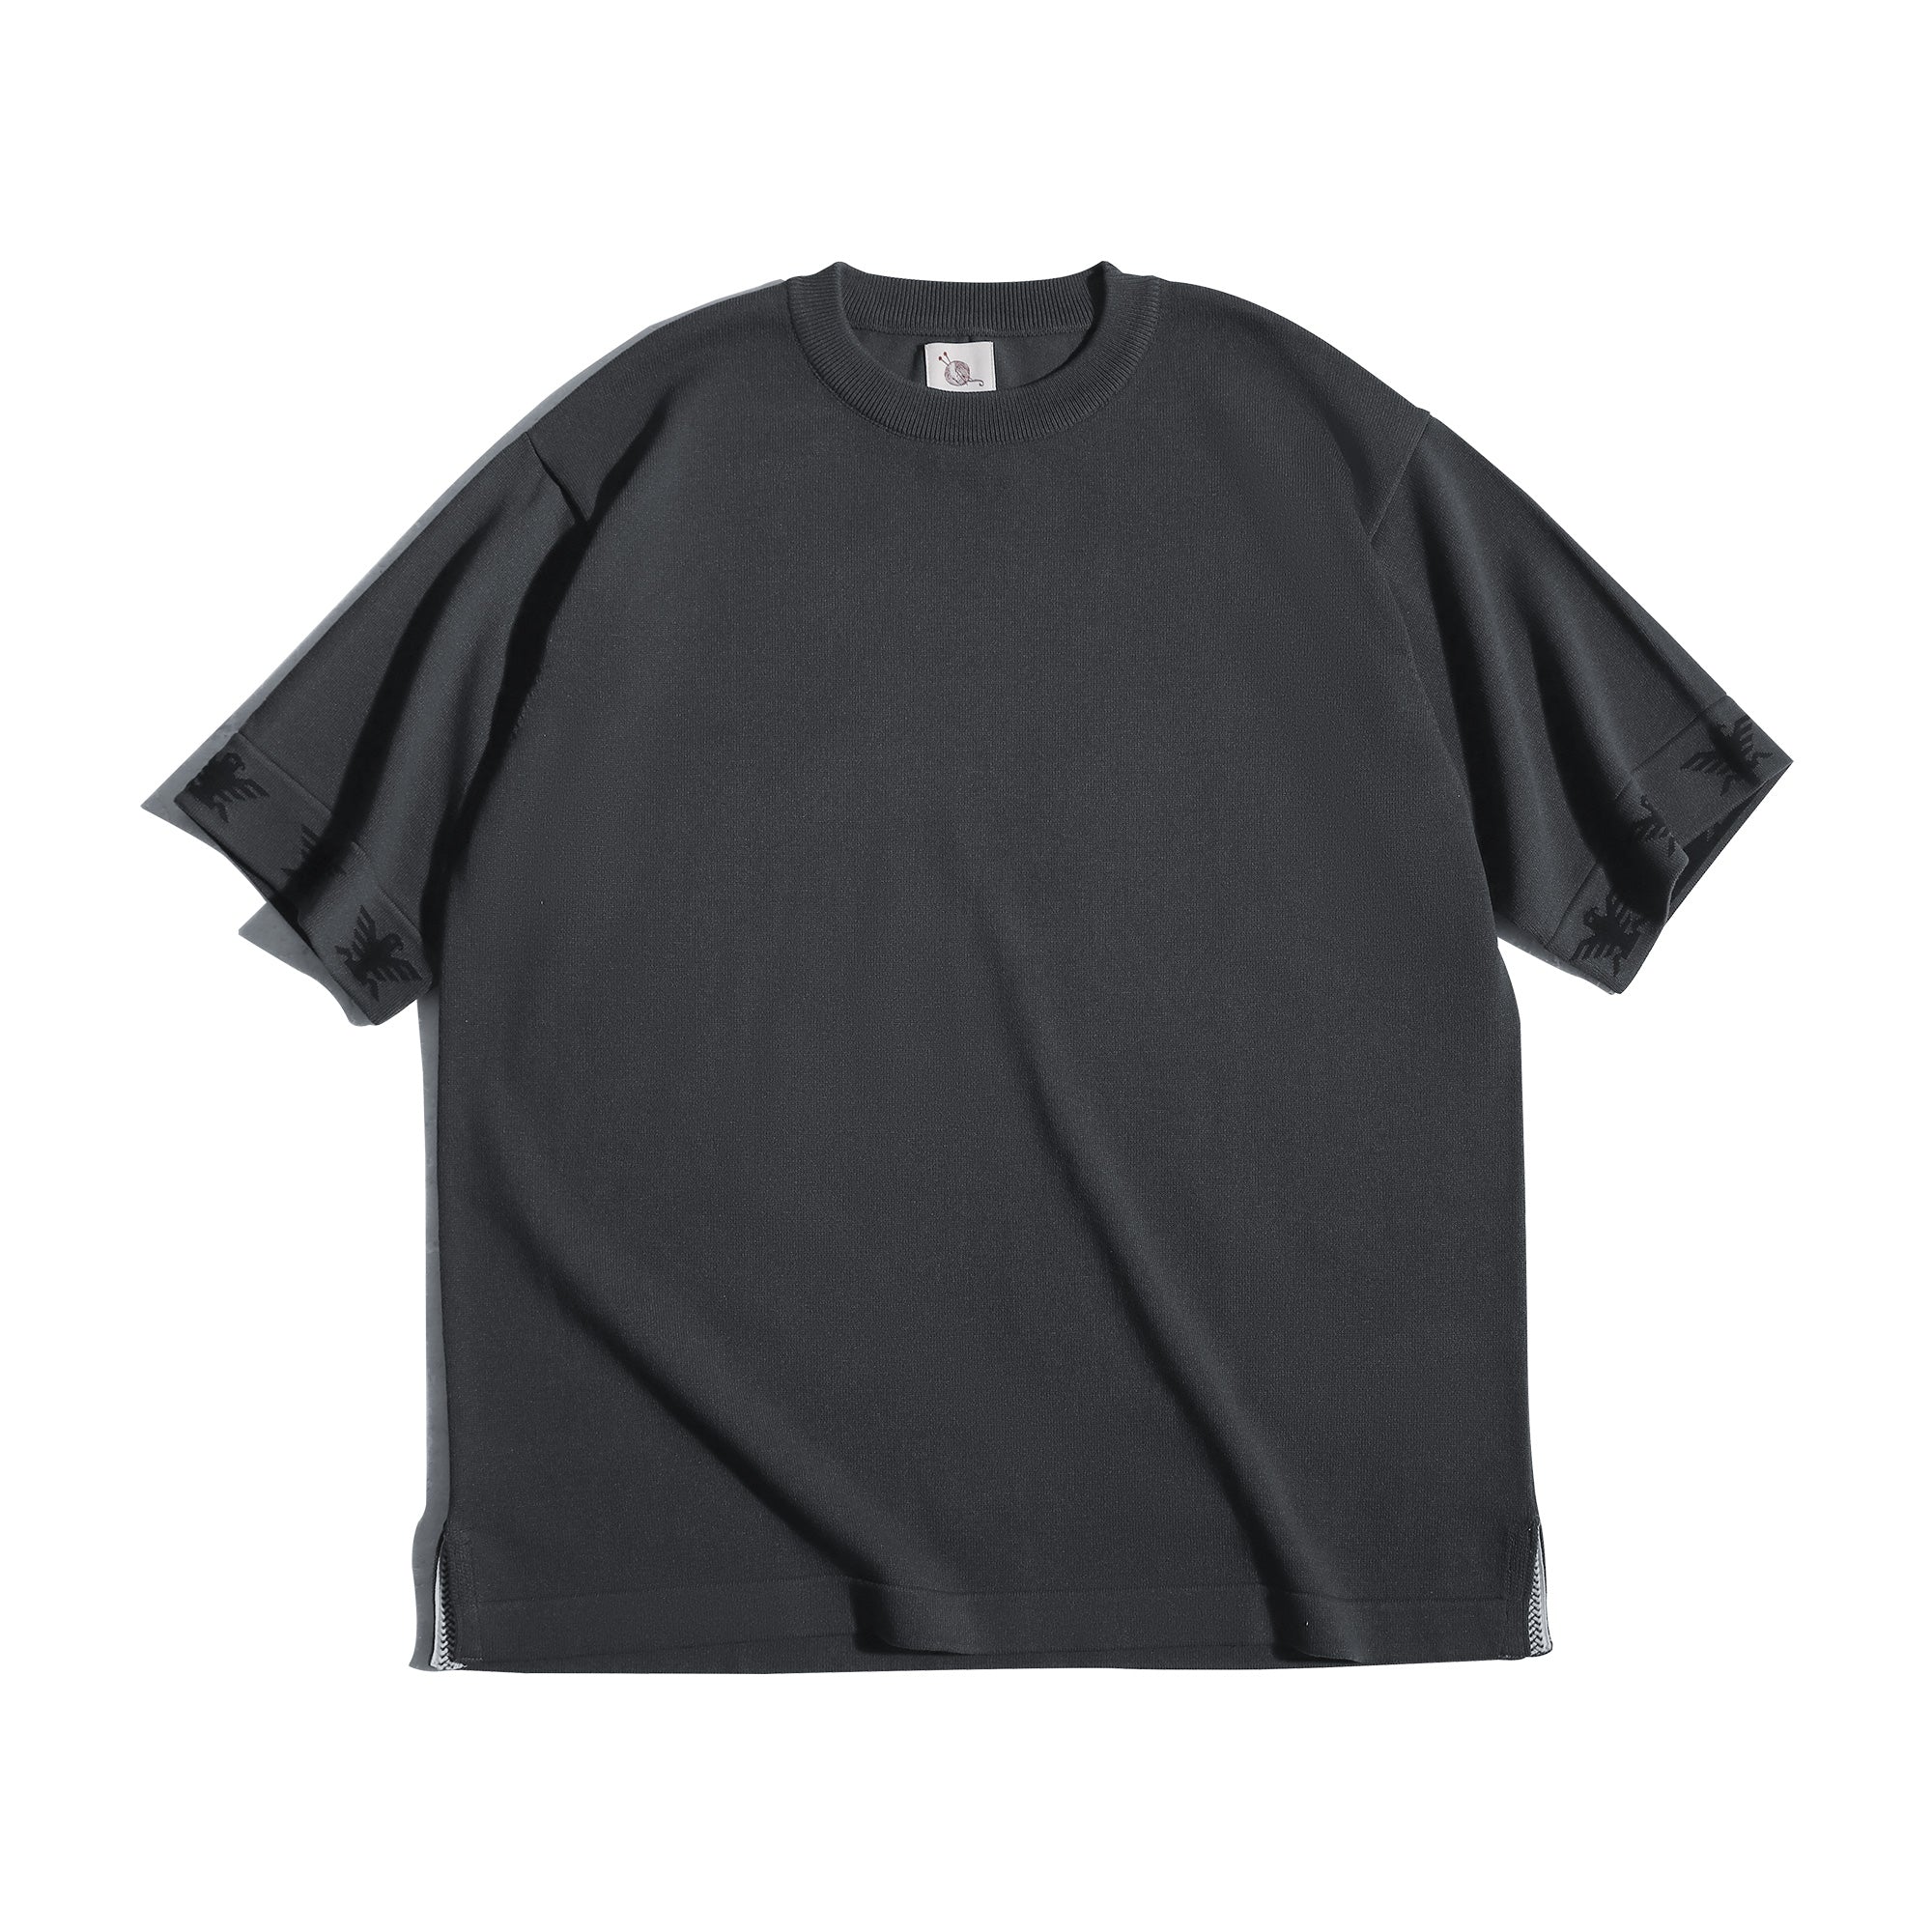 Retro Thunderbird Knit Tee Men's Summer T-Shirt